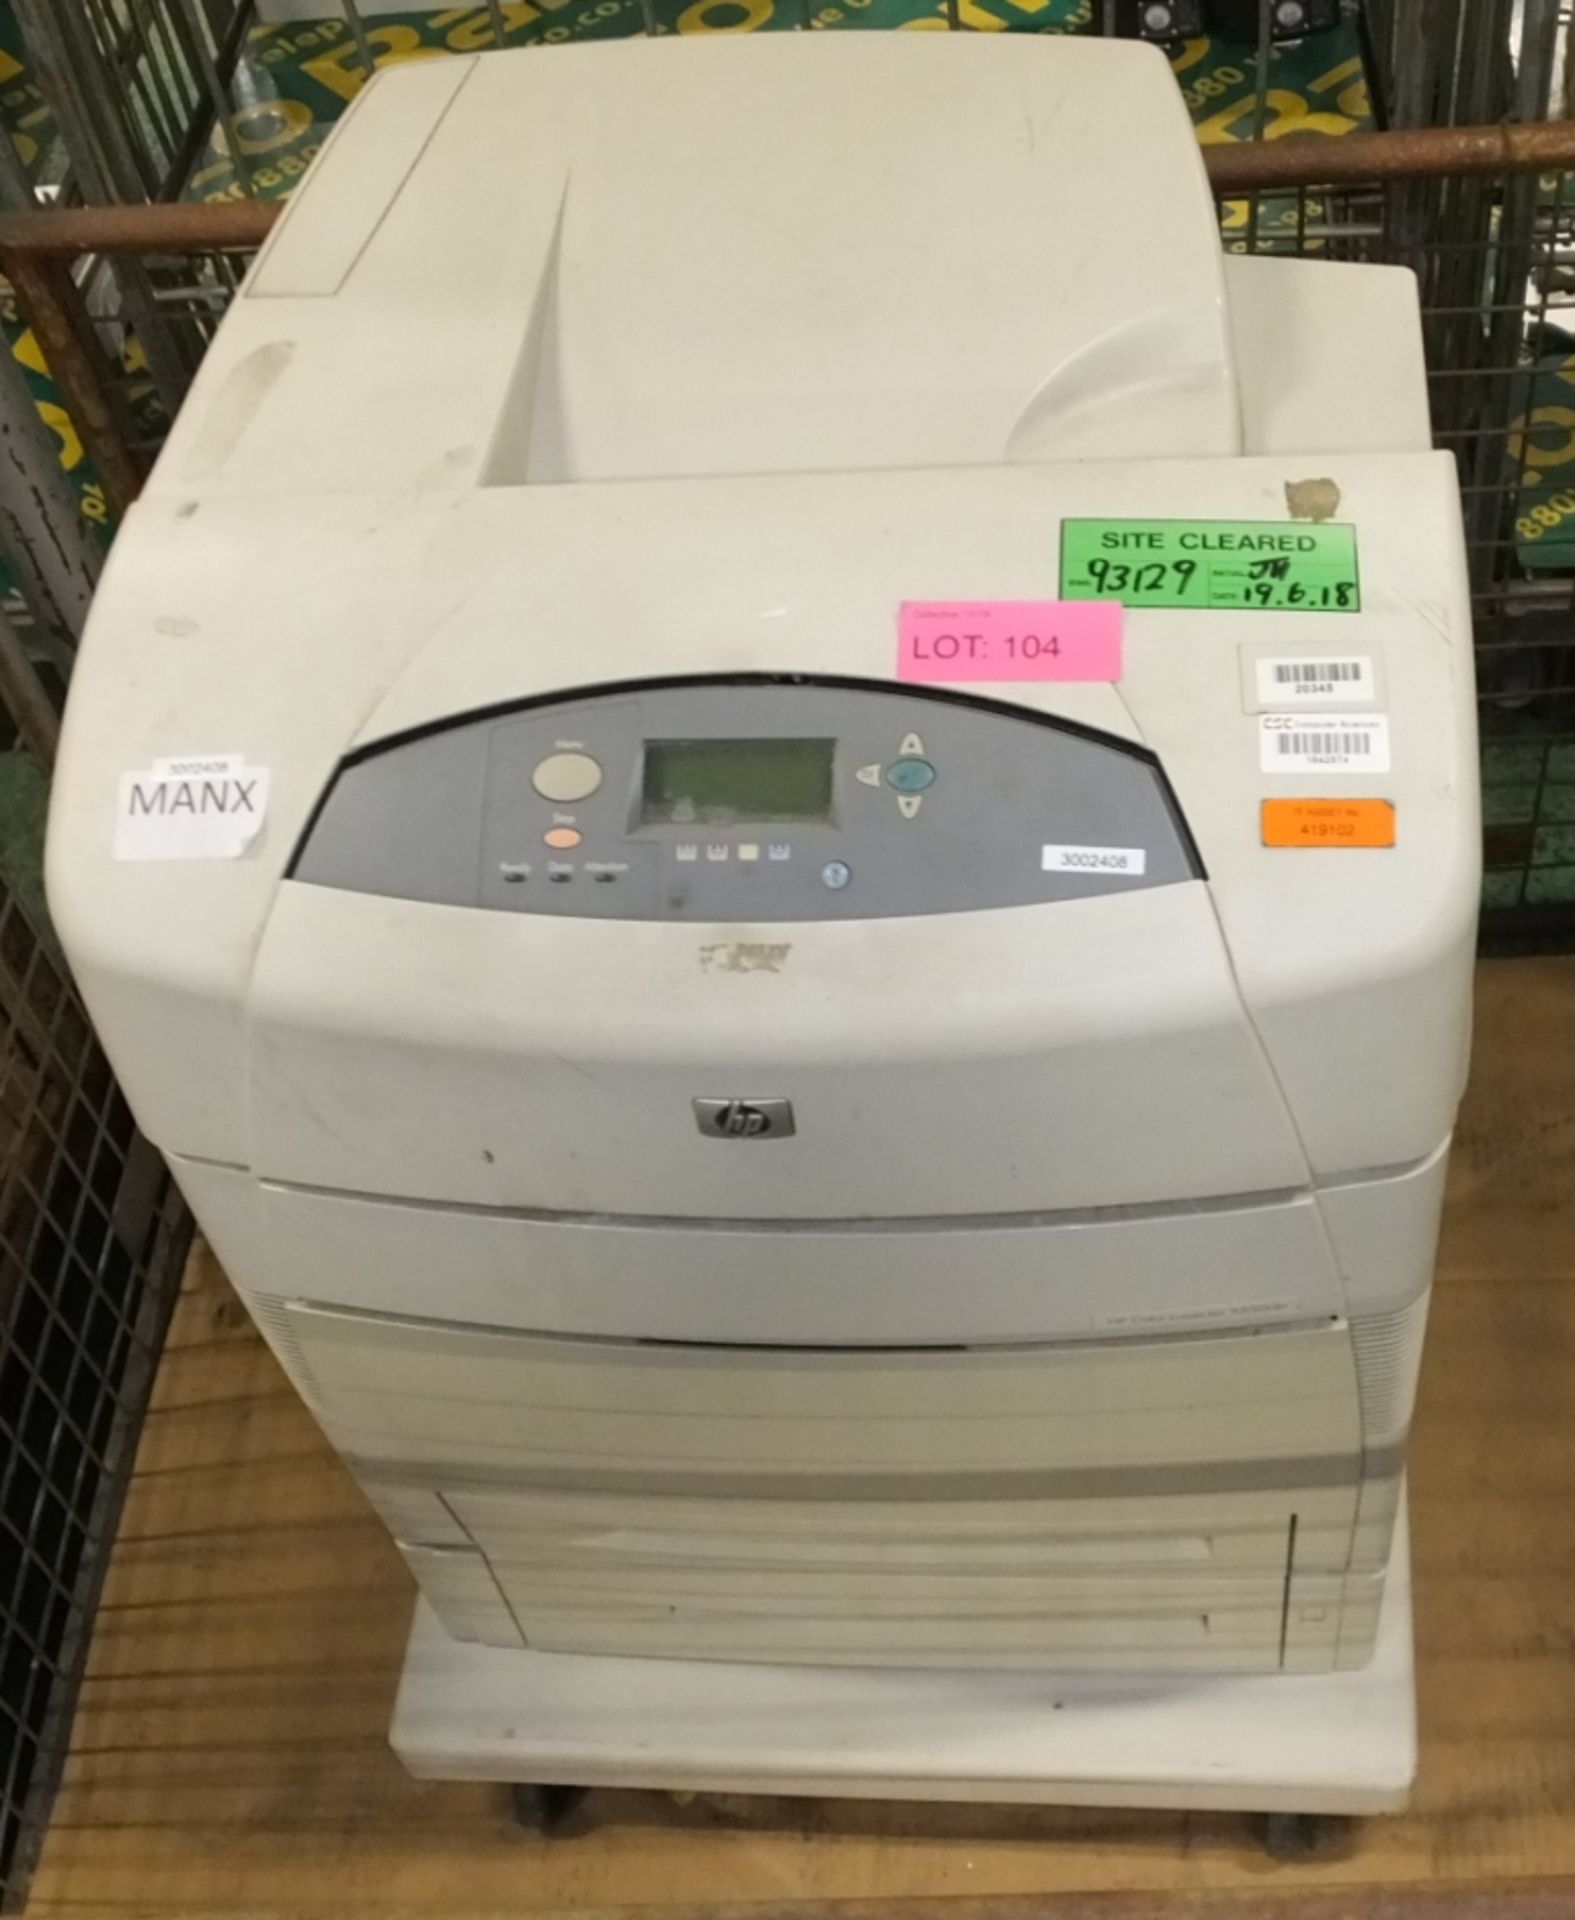 Hewlett Packard Q3715A Photocopier / Printer